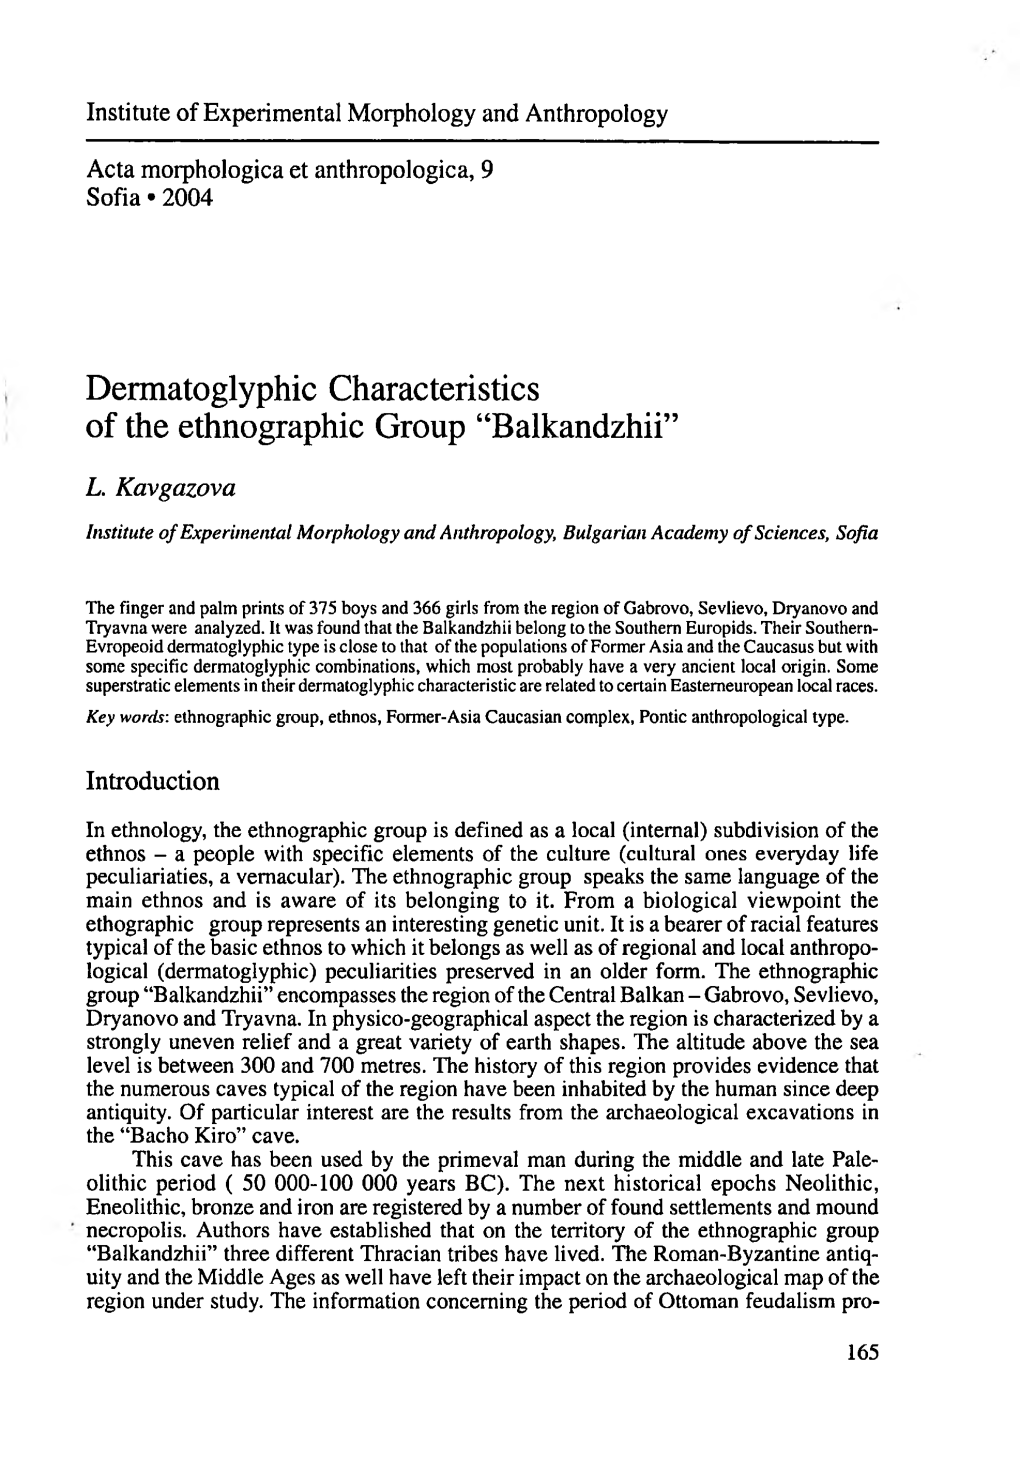 Dermatoglyphic Characteristics of the Ethnographic Group “Balkandzhii”